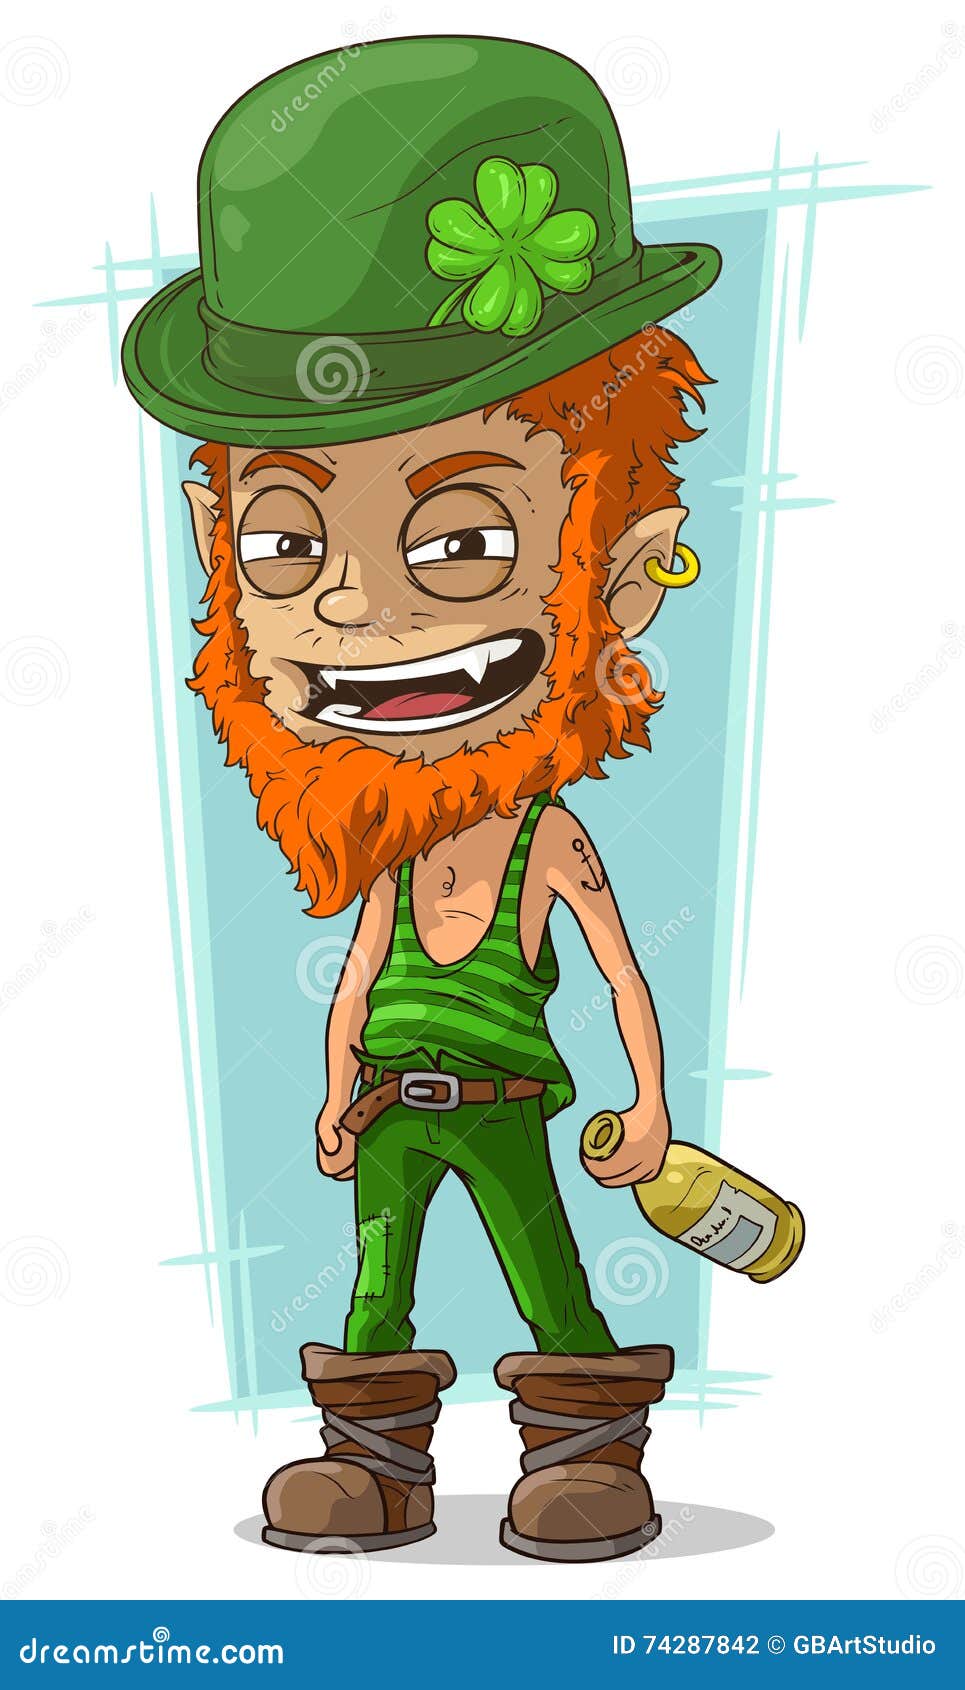 cartoon-evil-drunk-leprechaun-bottle-vector-illustration-74287842.jpg